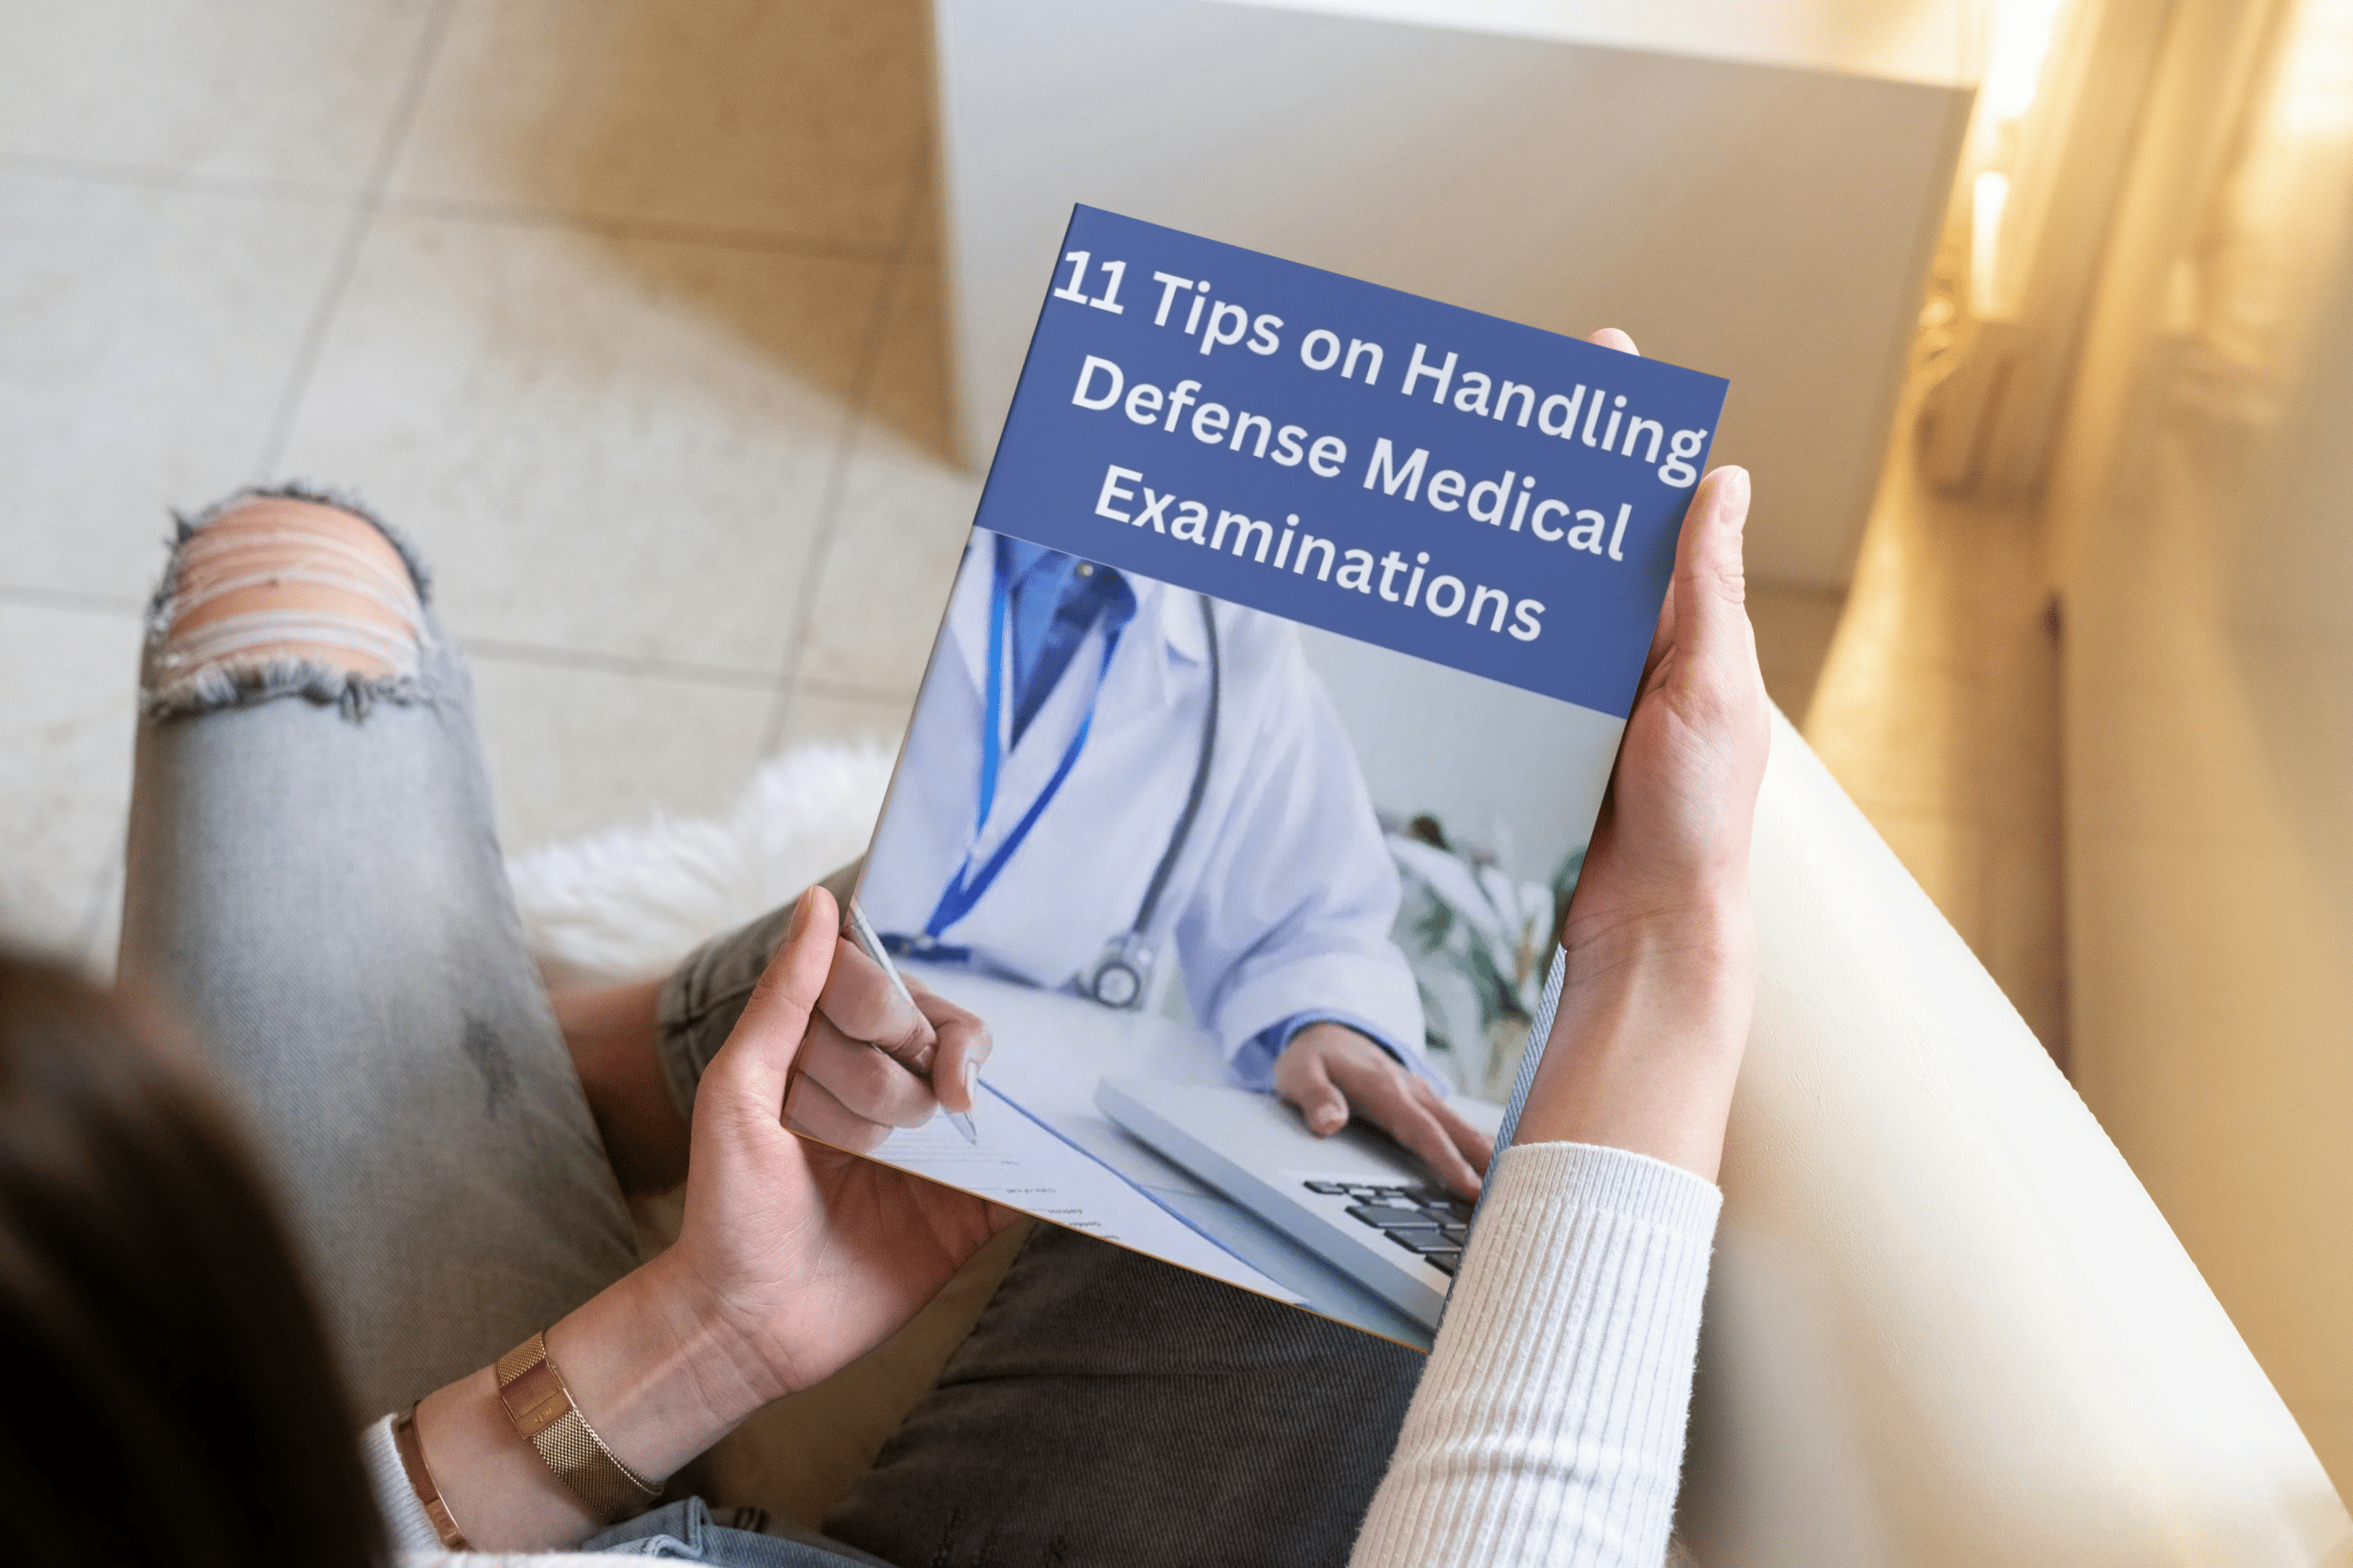 11 Tips On Handling Defense Medical Examinations